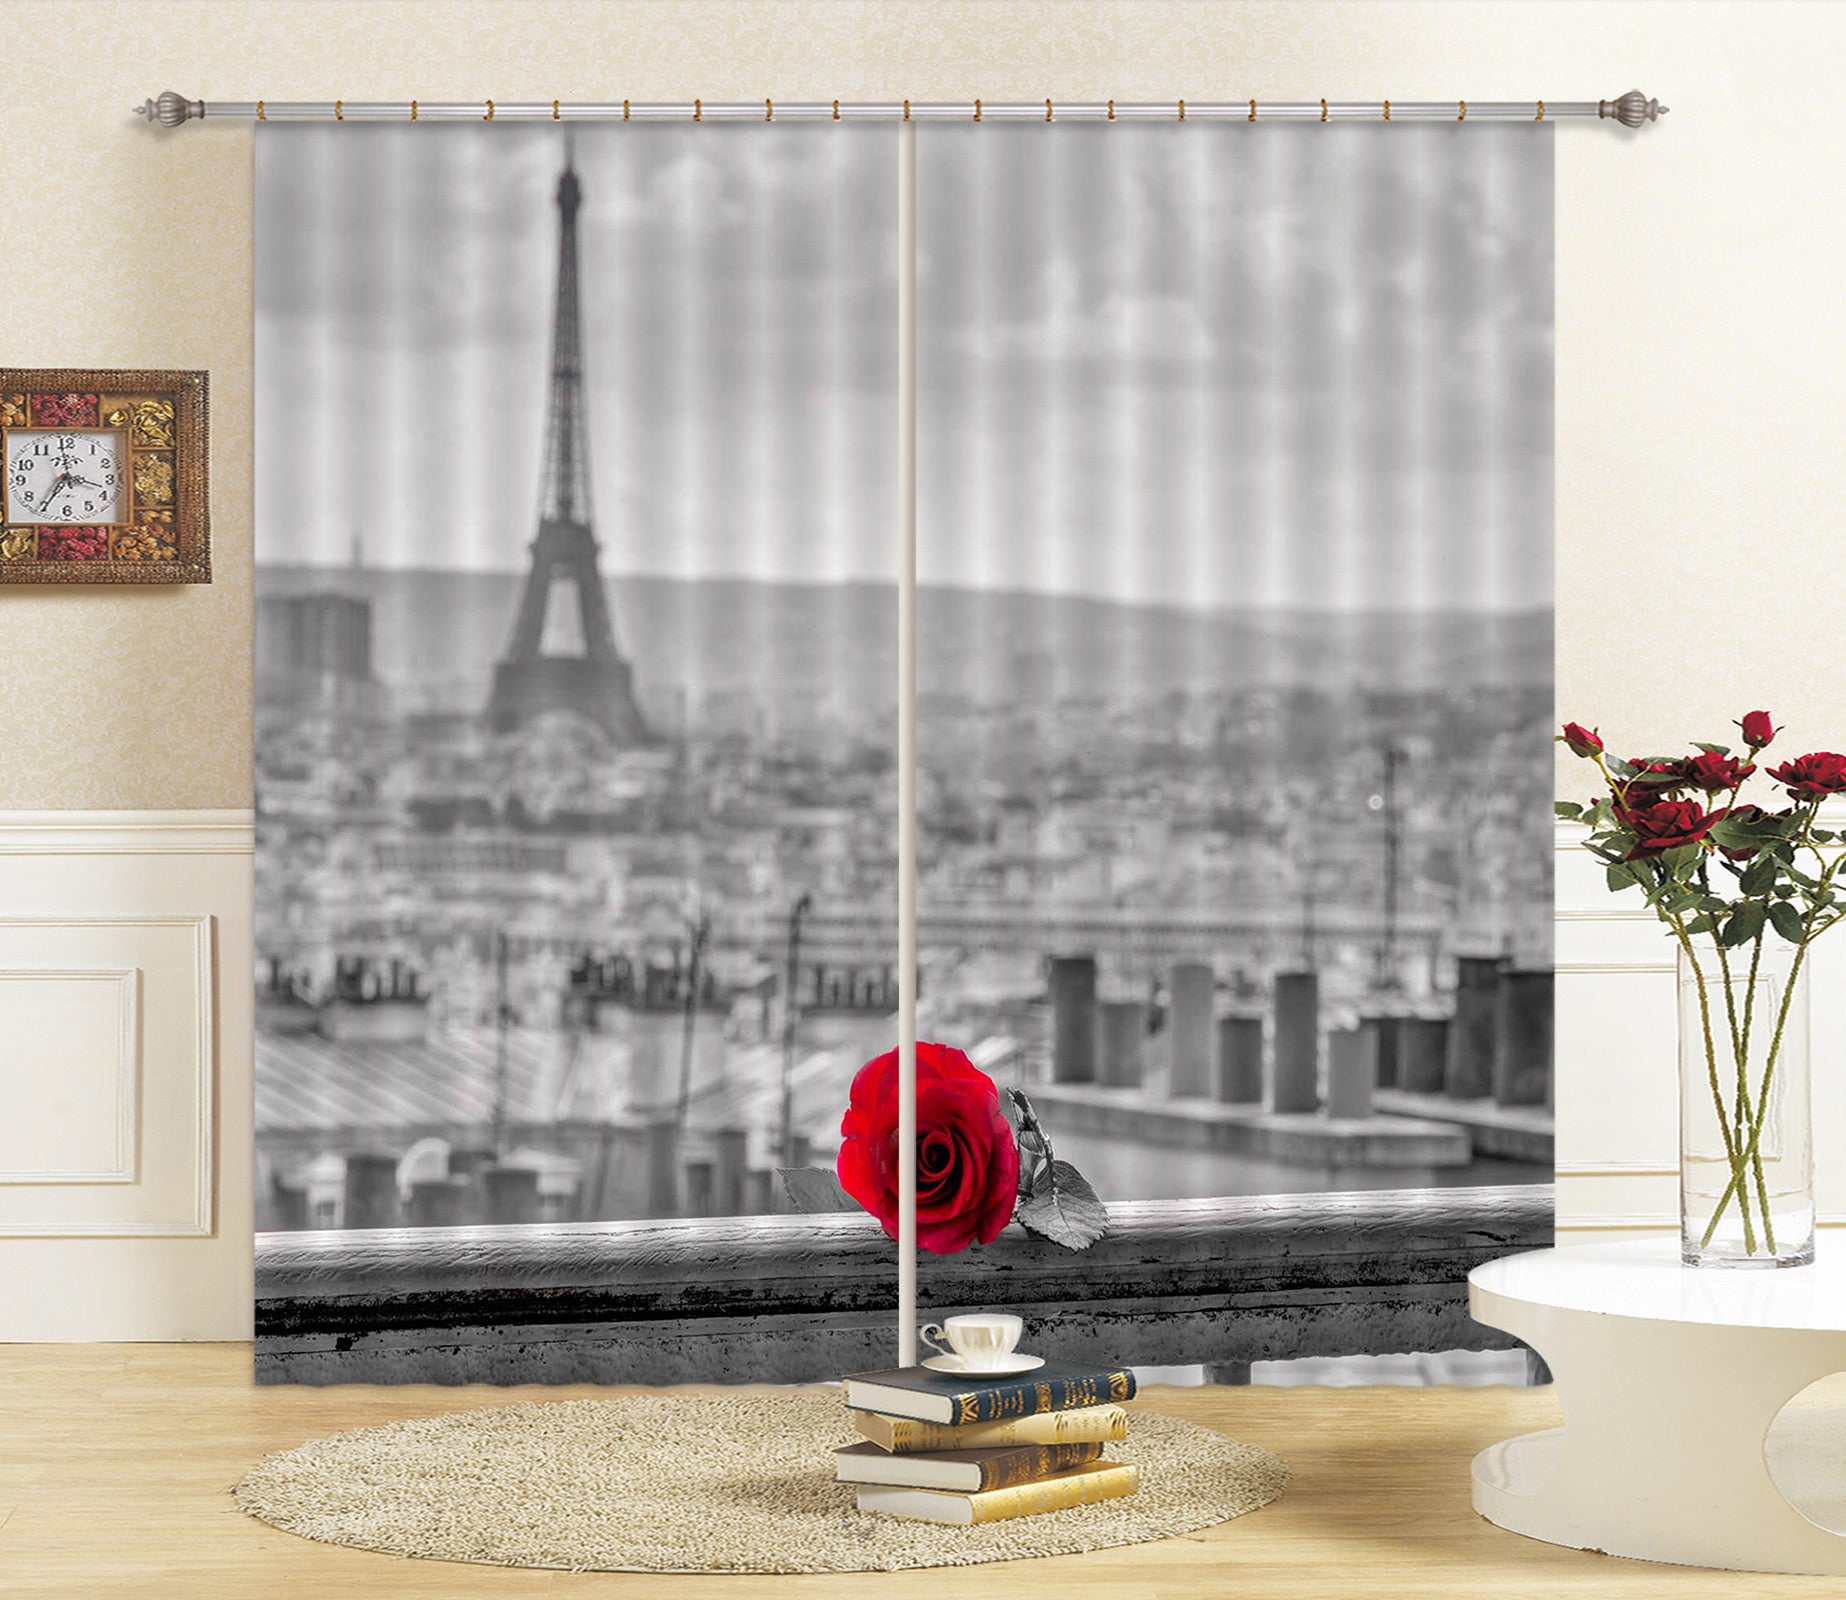 3D Rose Eiffel Tower 026 Assaf Frank Curtain Curtains Drapes